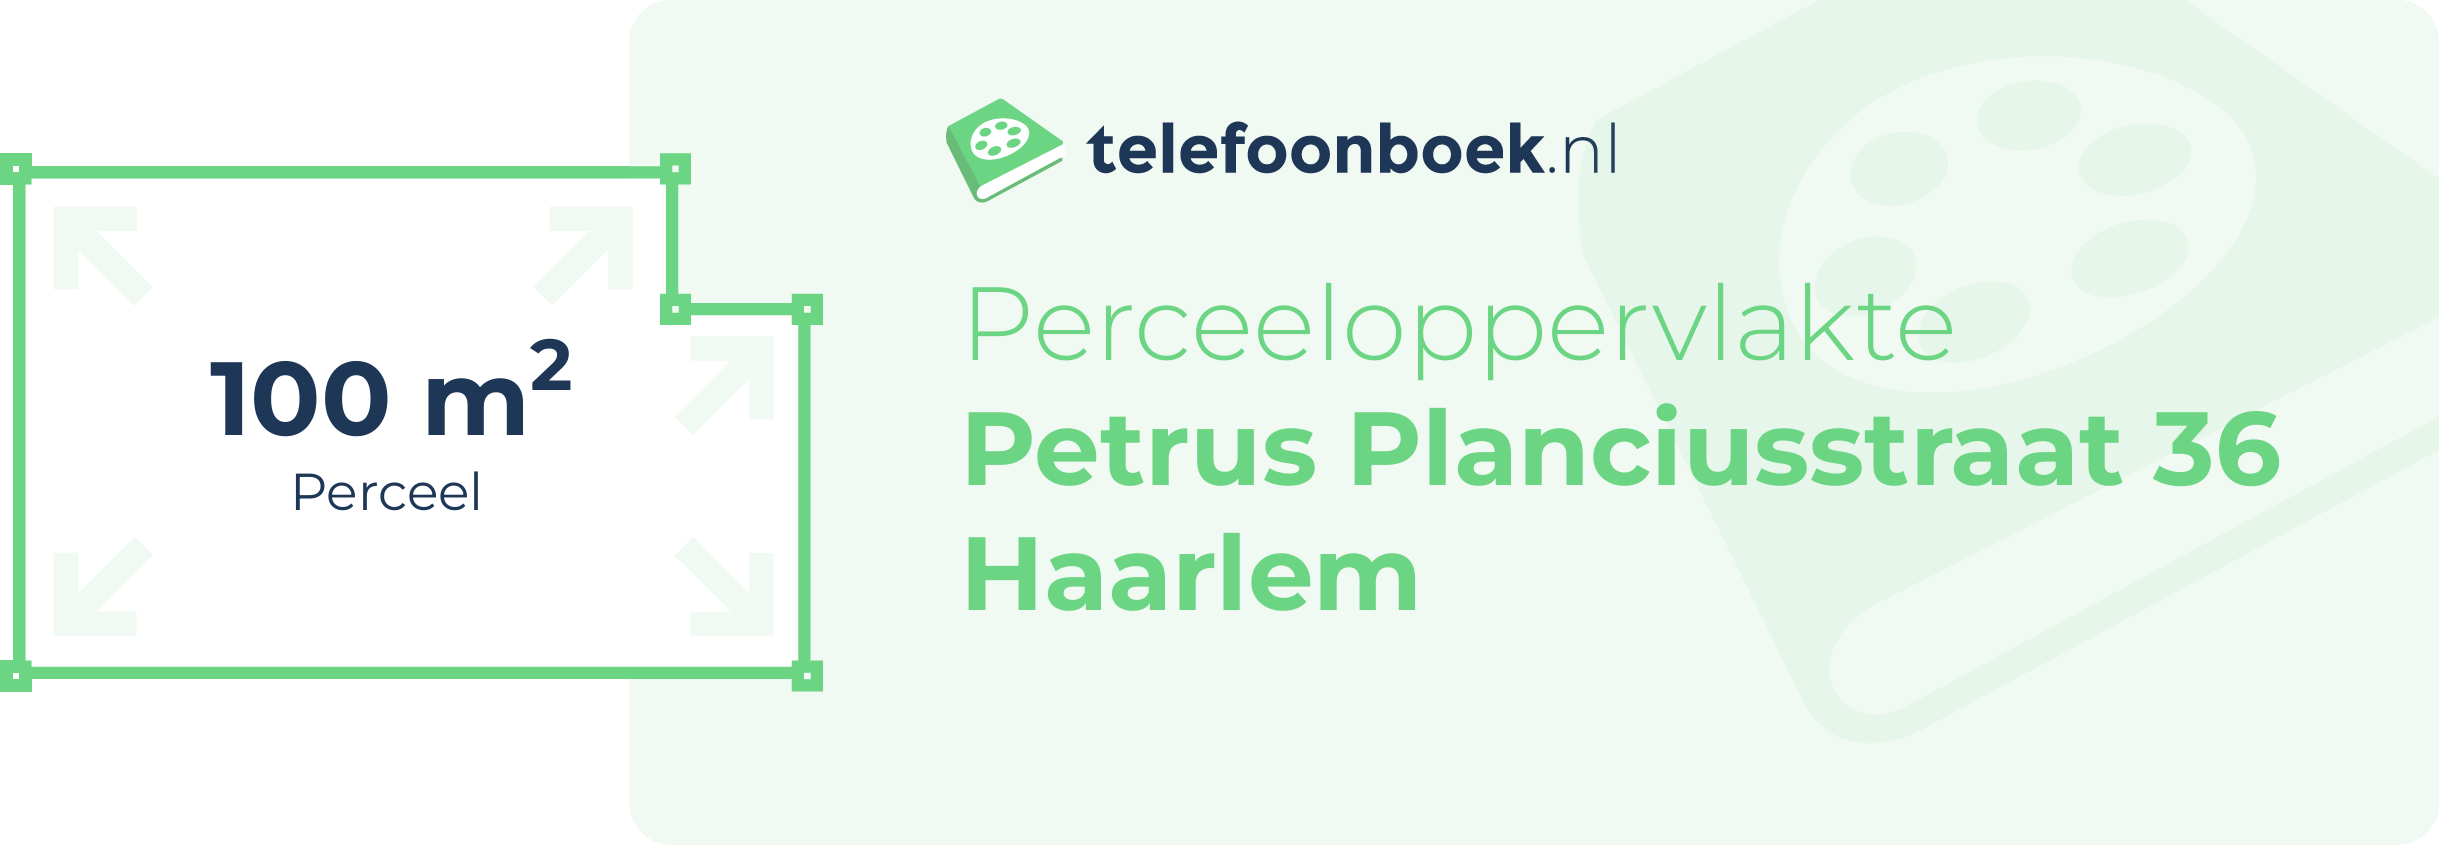 Perceeloppervlakte Petrus Planciusstraat 36 Haarlem